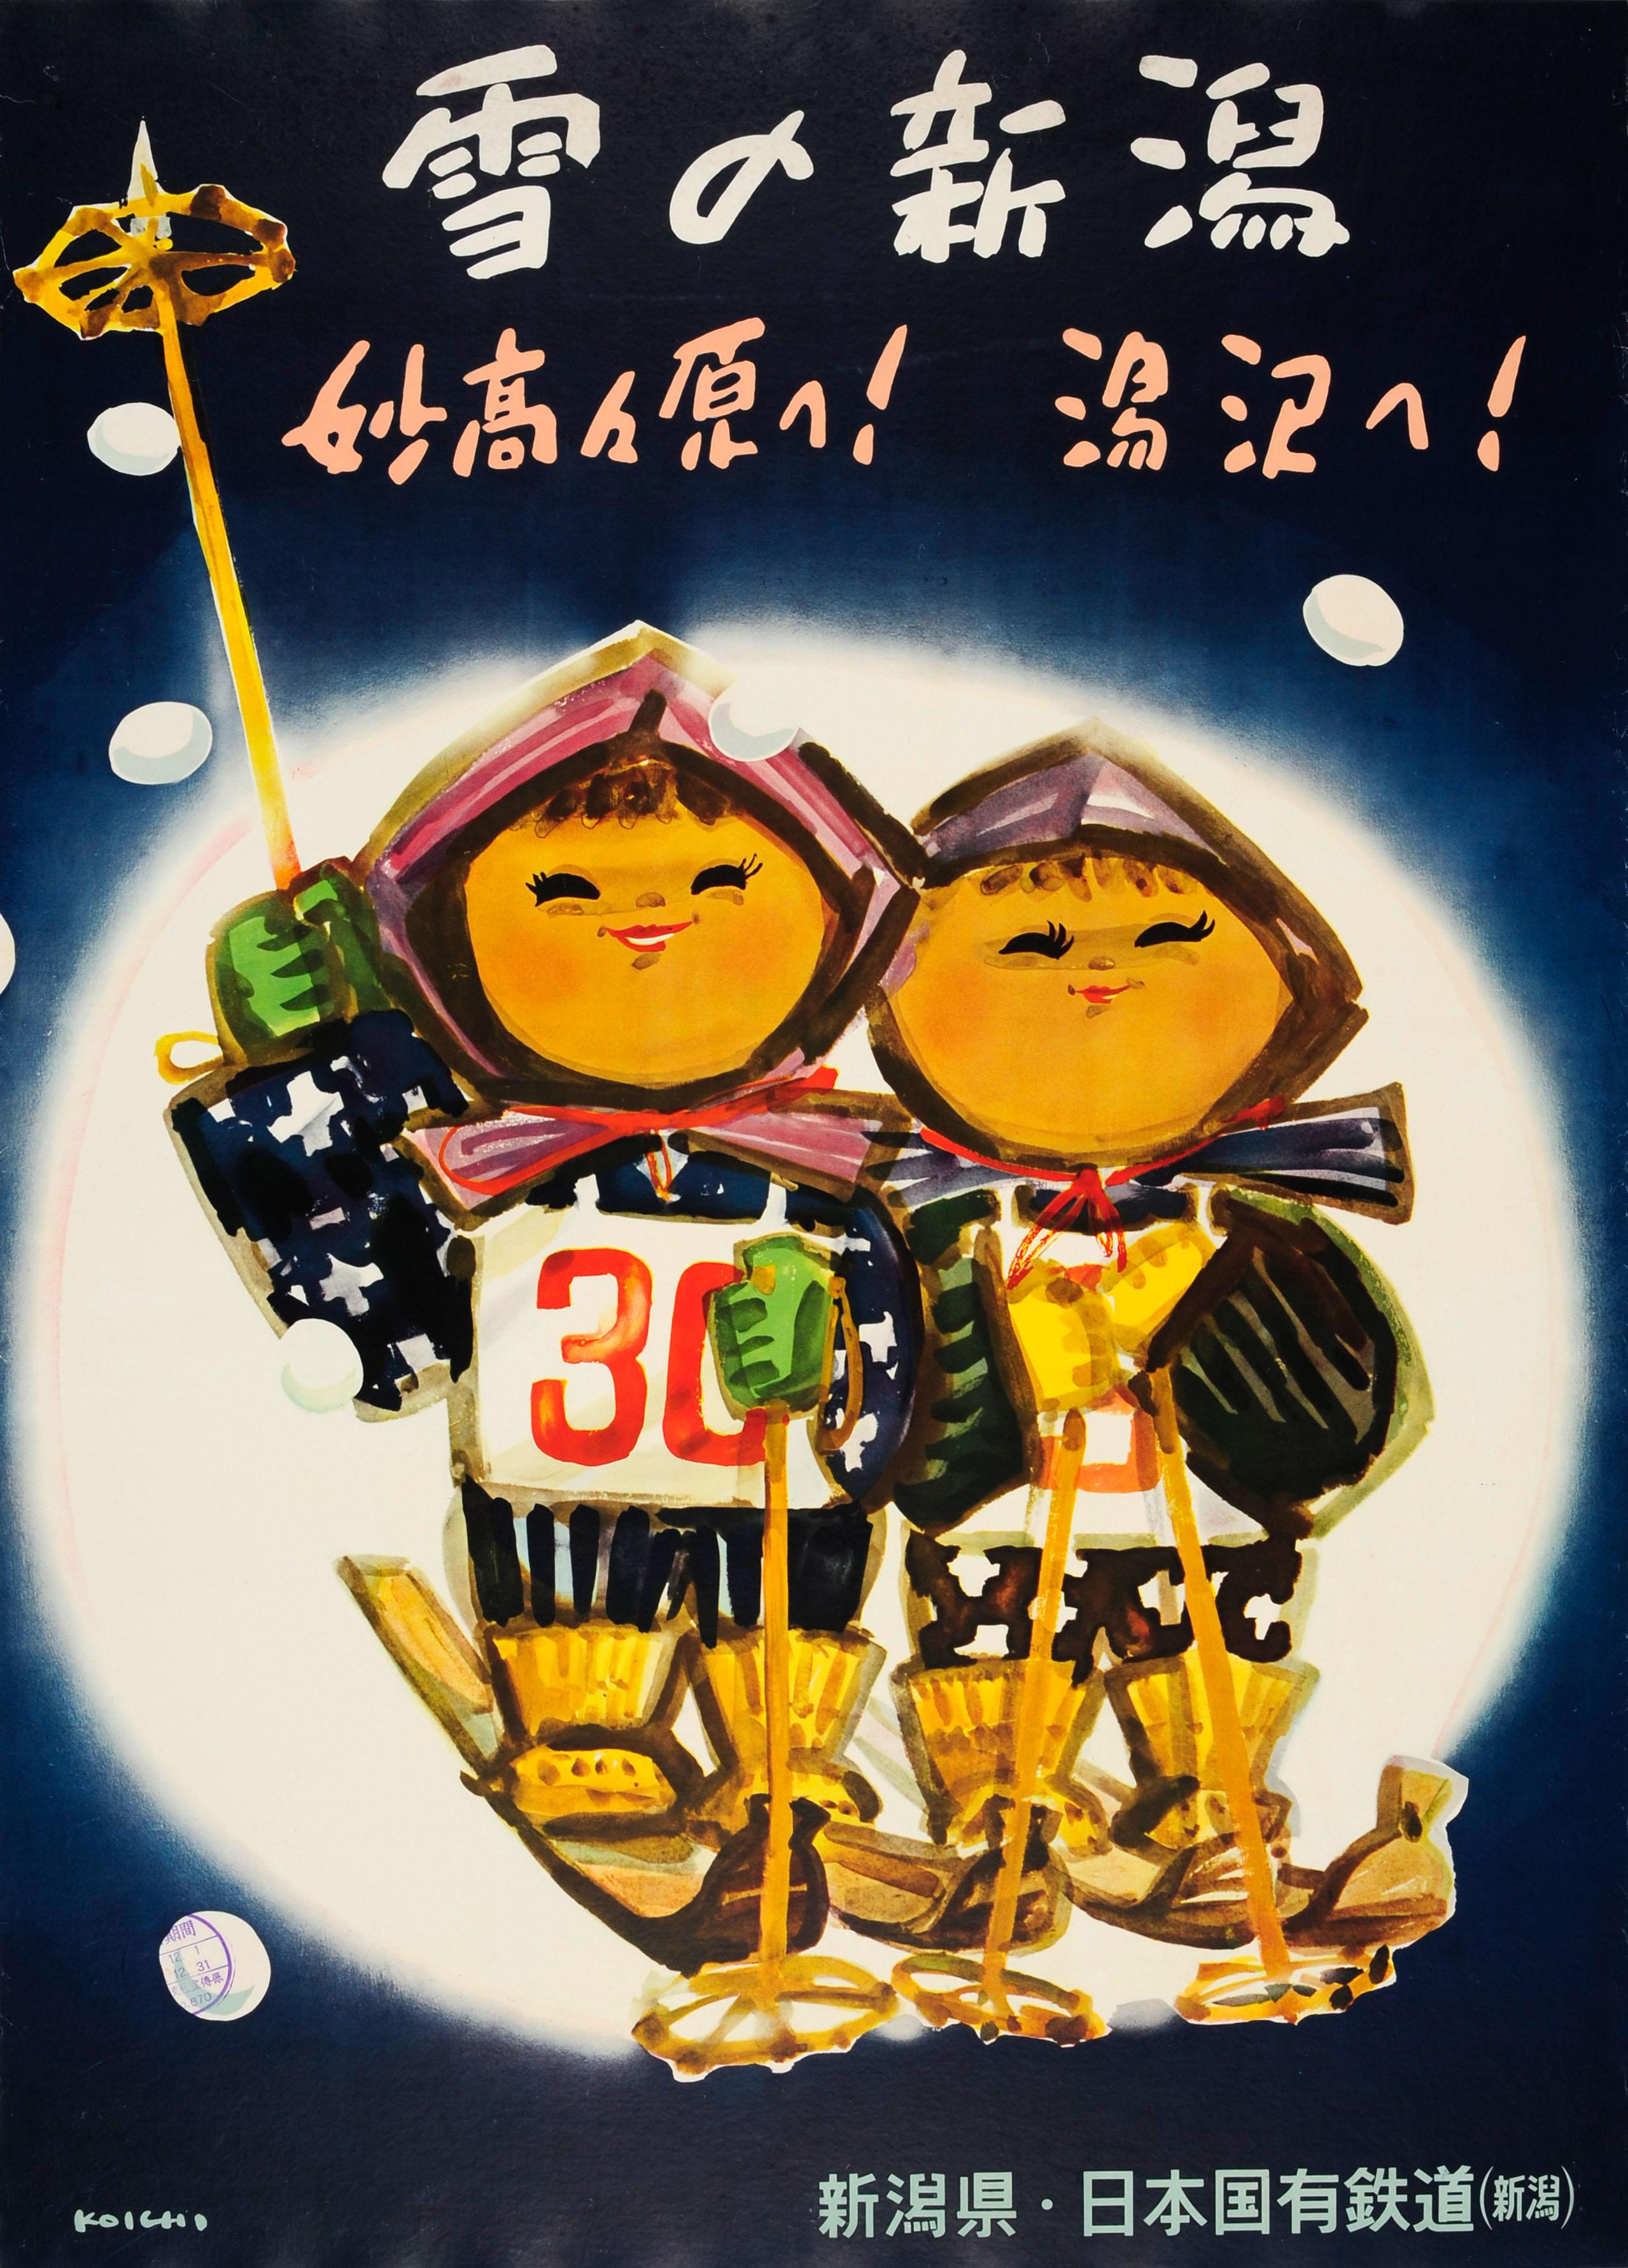 Koichi Print – Original Vintage Japanese Ski Poster Featuring Smiling Children Skiers On Skis